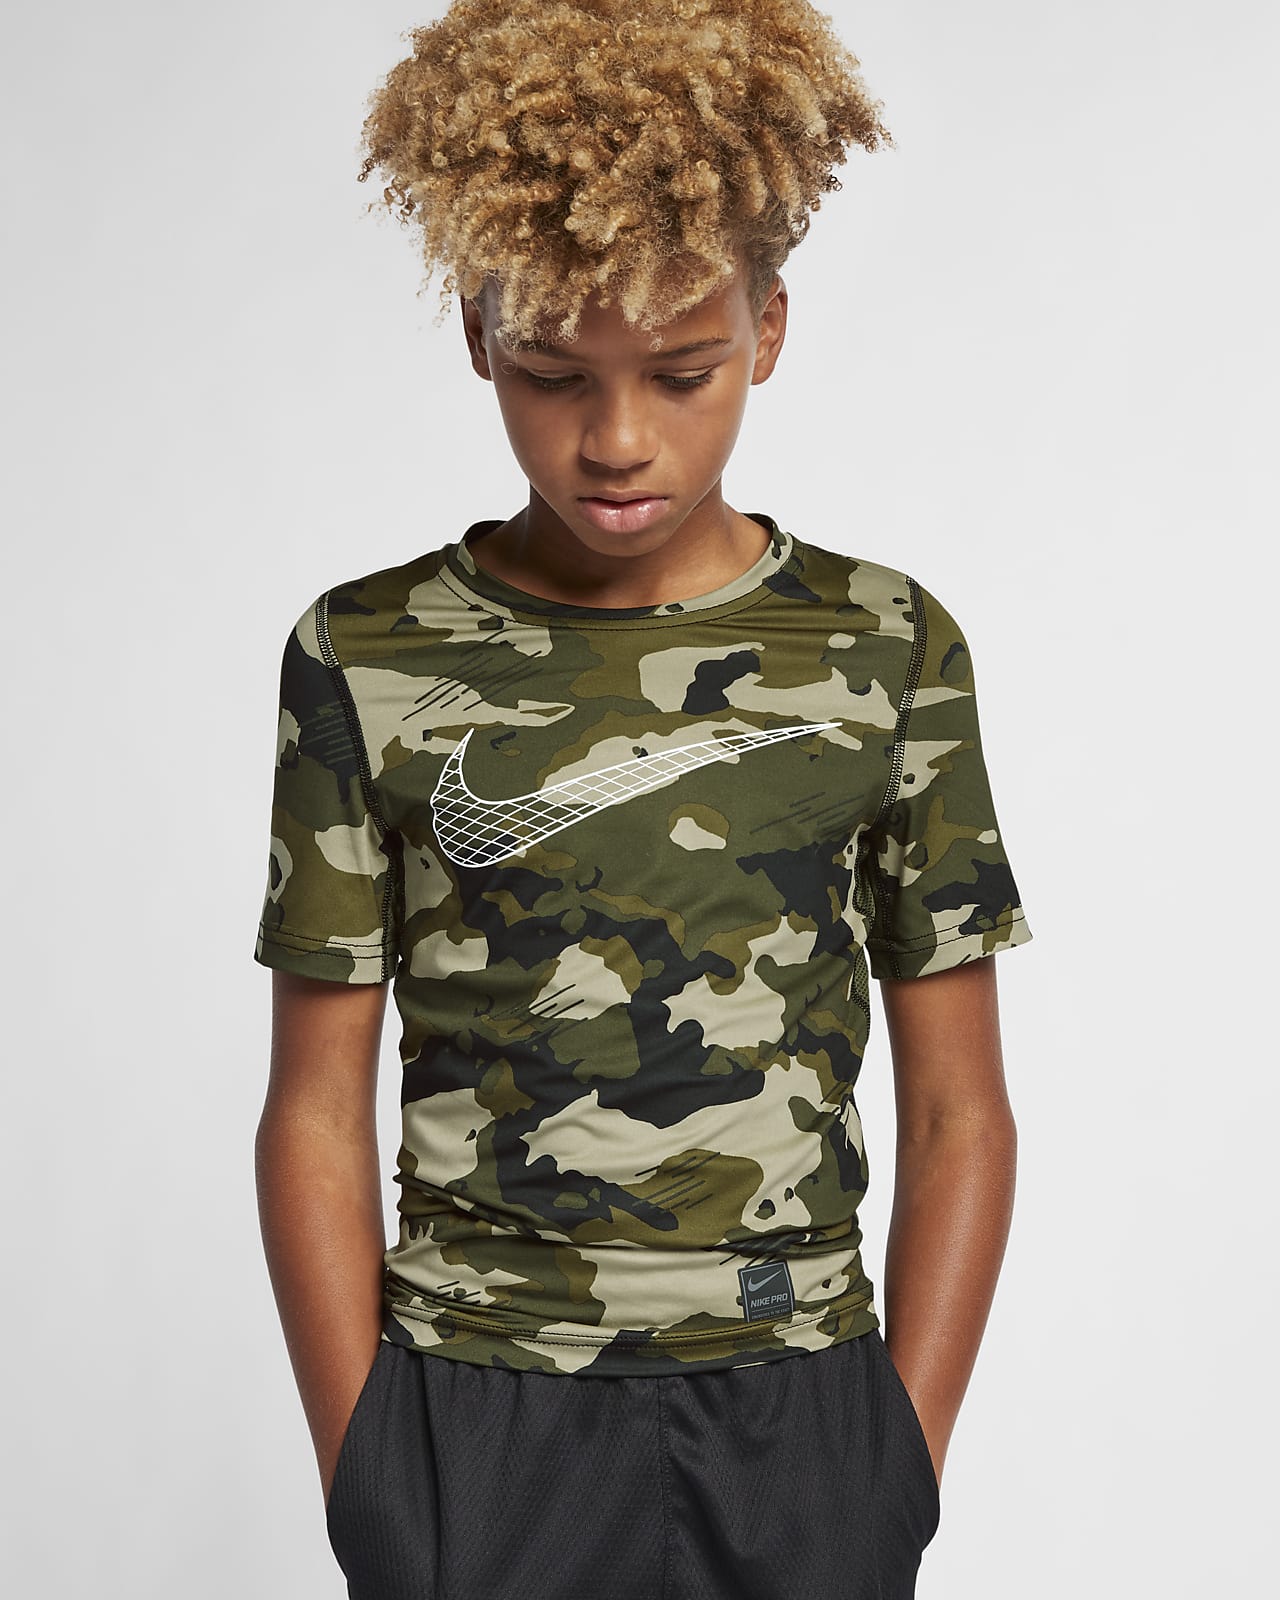 Nike Pro Boys' Short-Sleeve Camo Top. Nike AE